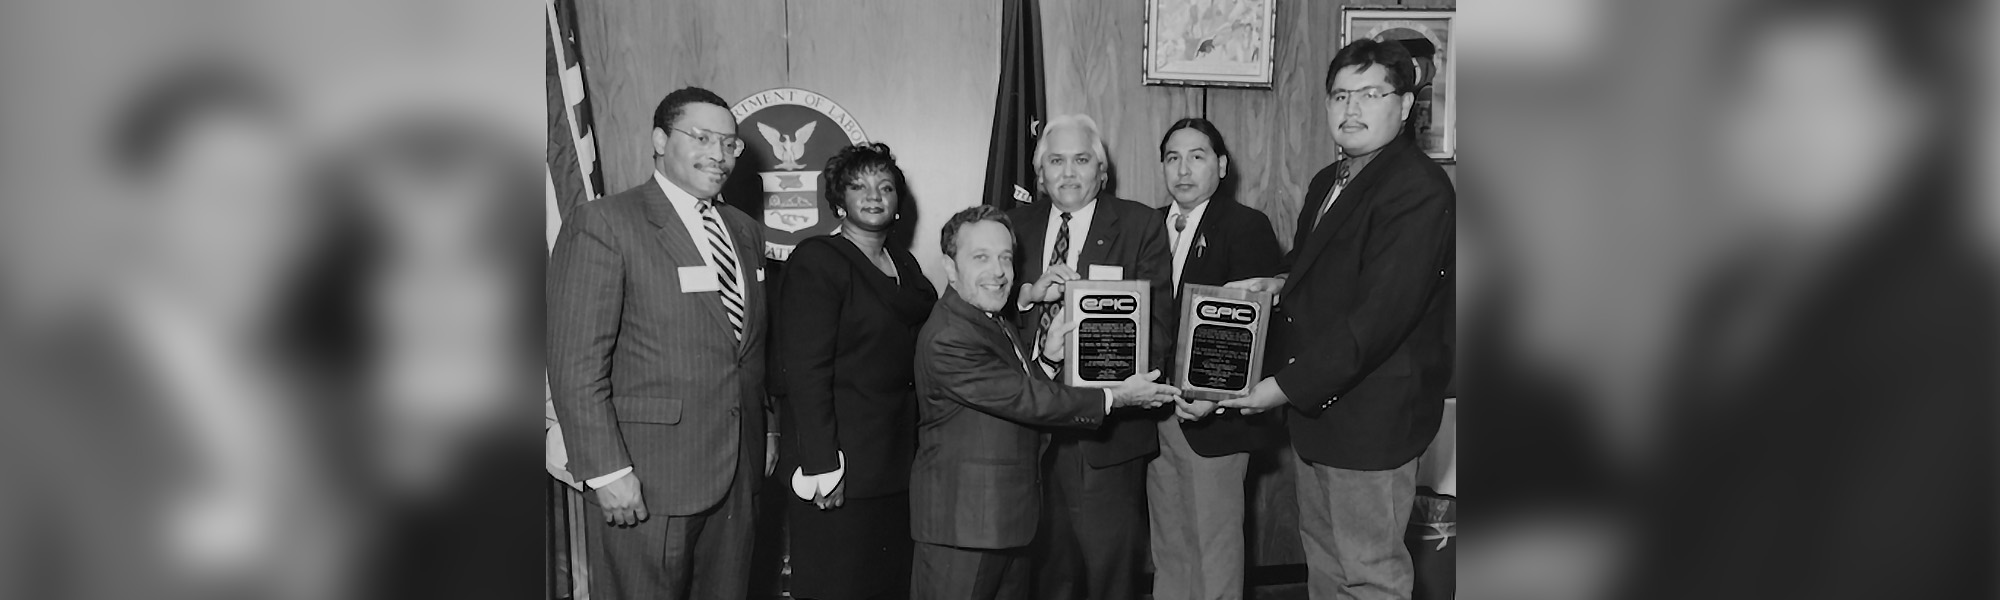 Receiving award from Robert Reich in Washington, DC